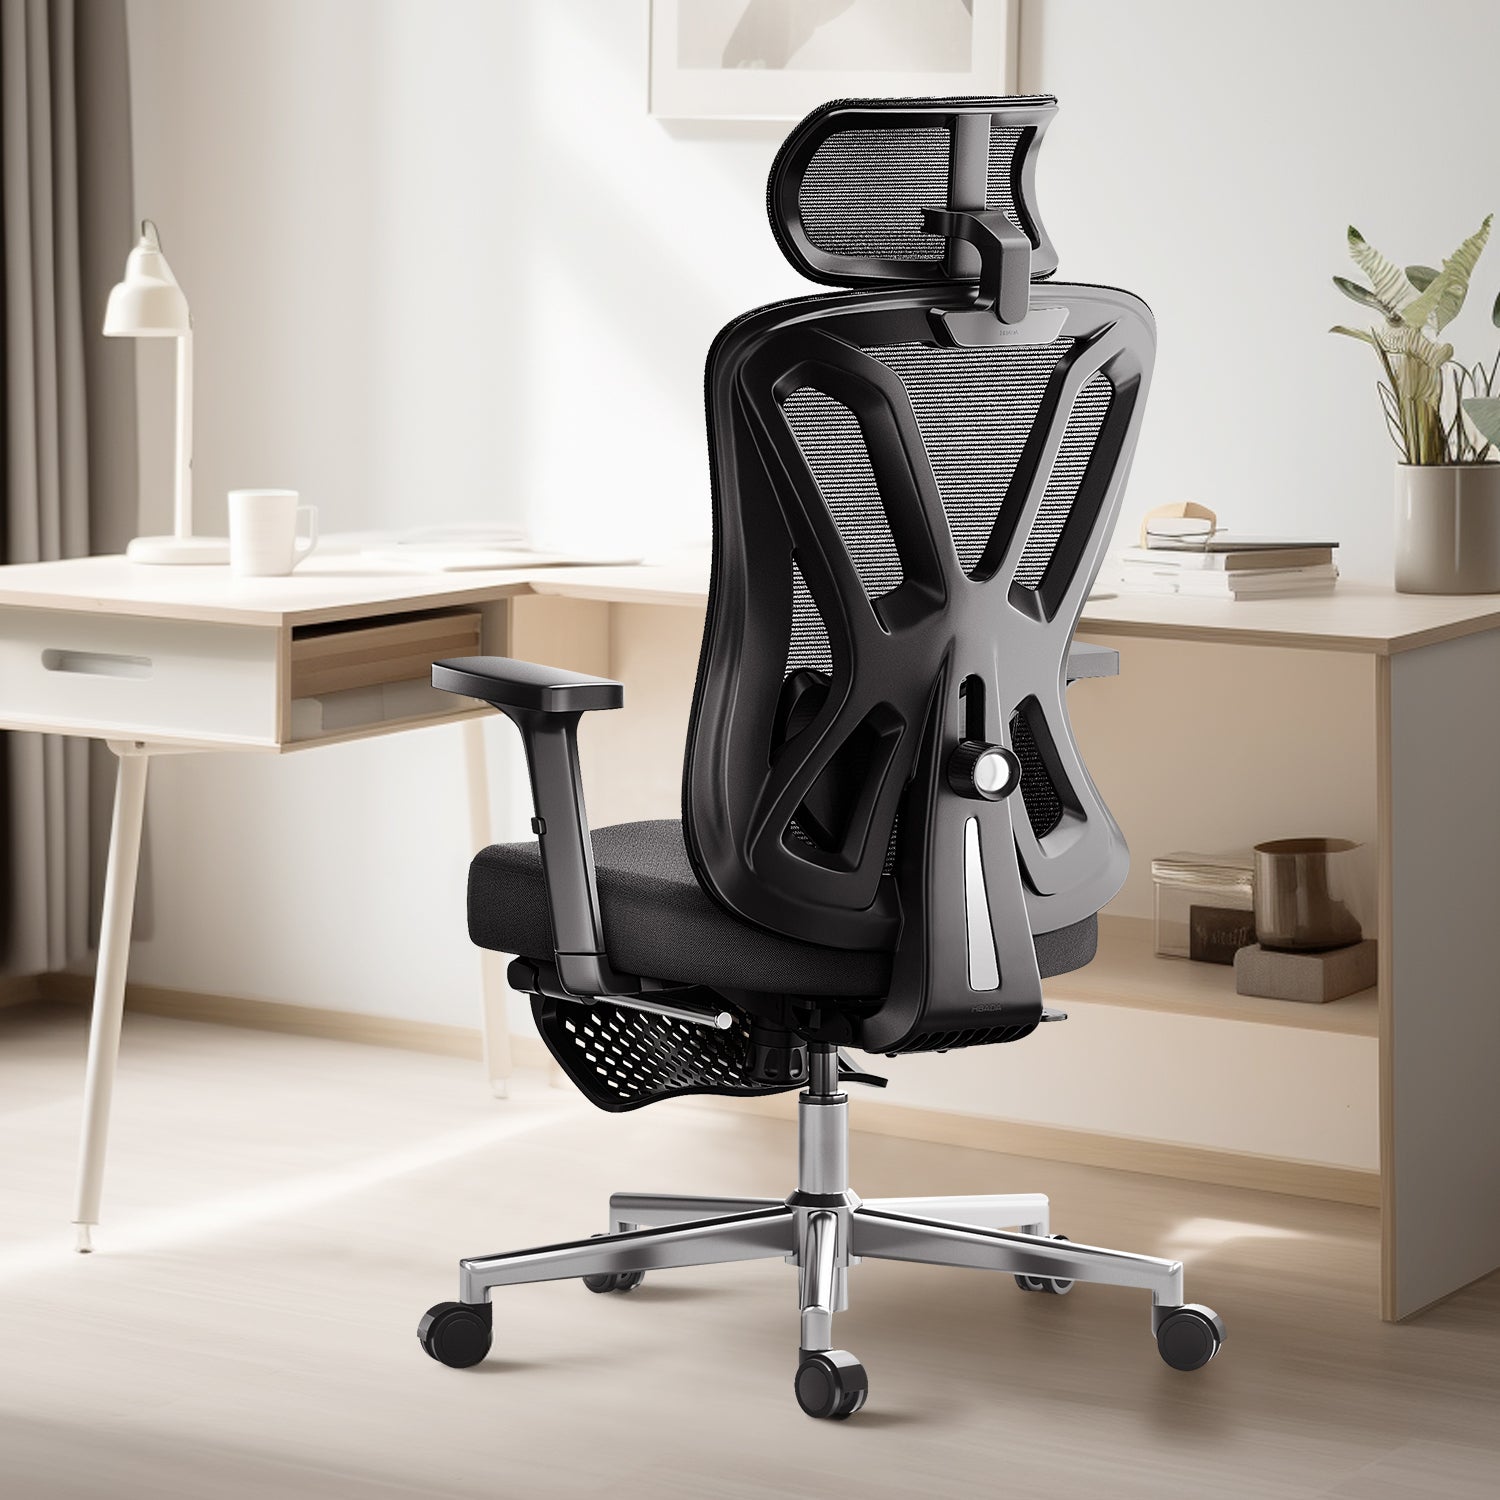 HBADA P5 Ergonomic Office Chair with Footrest